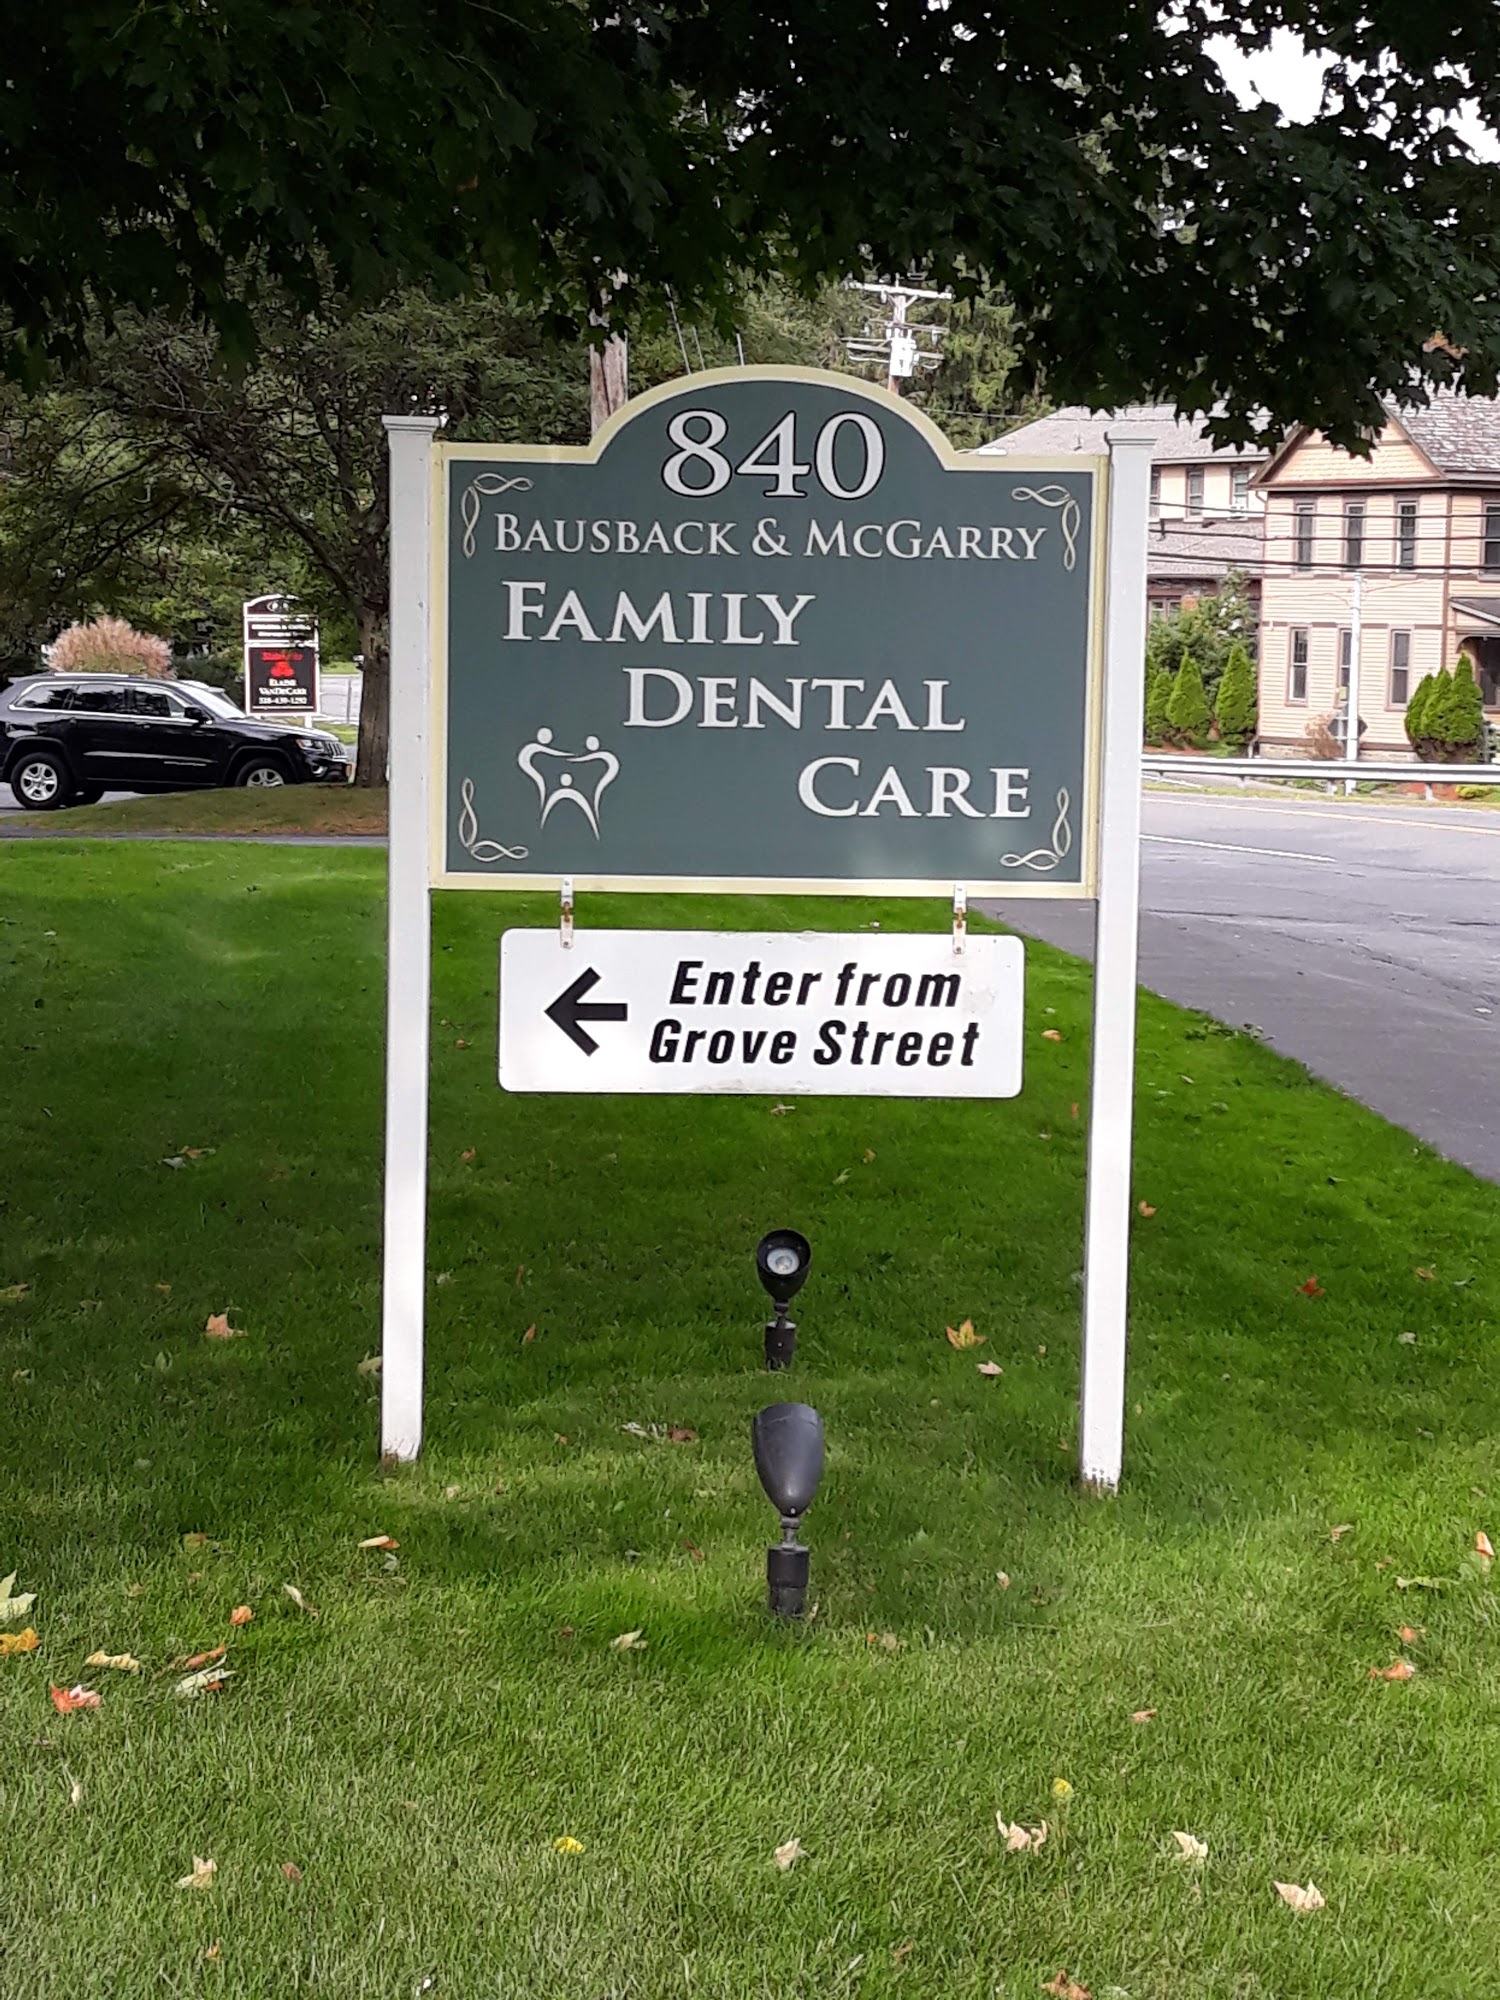 Bausback & McGarry Family Dental Care